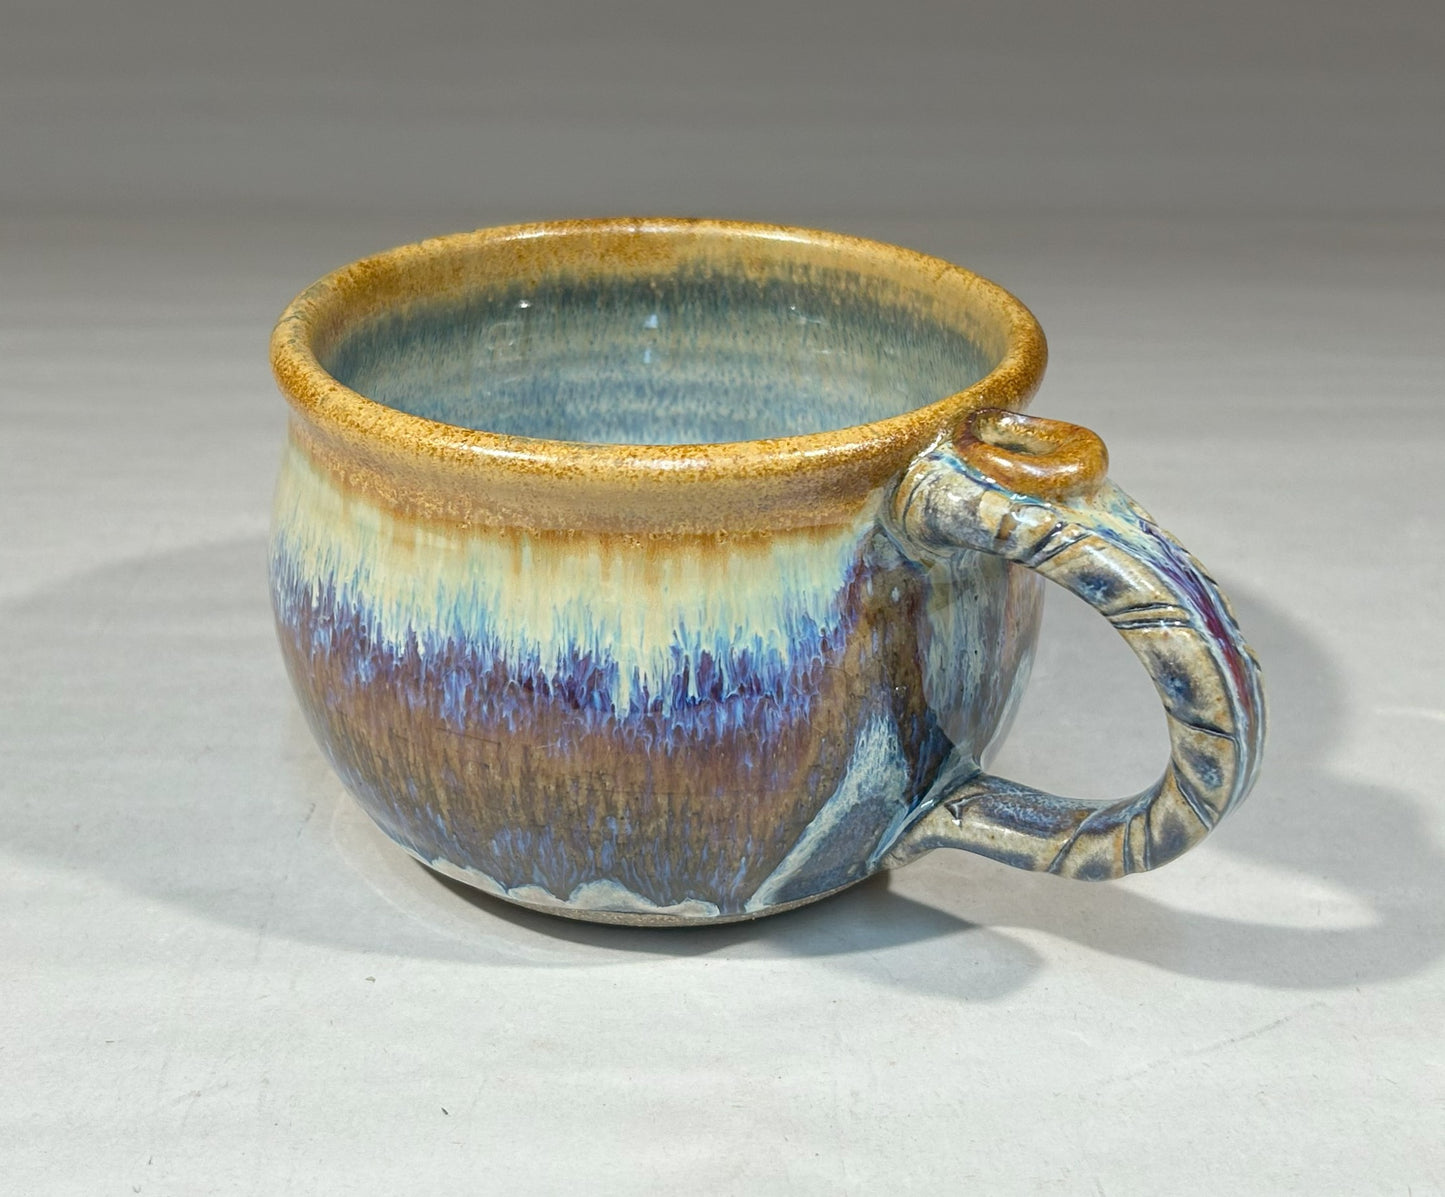 Pottery Soup Mug